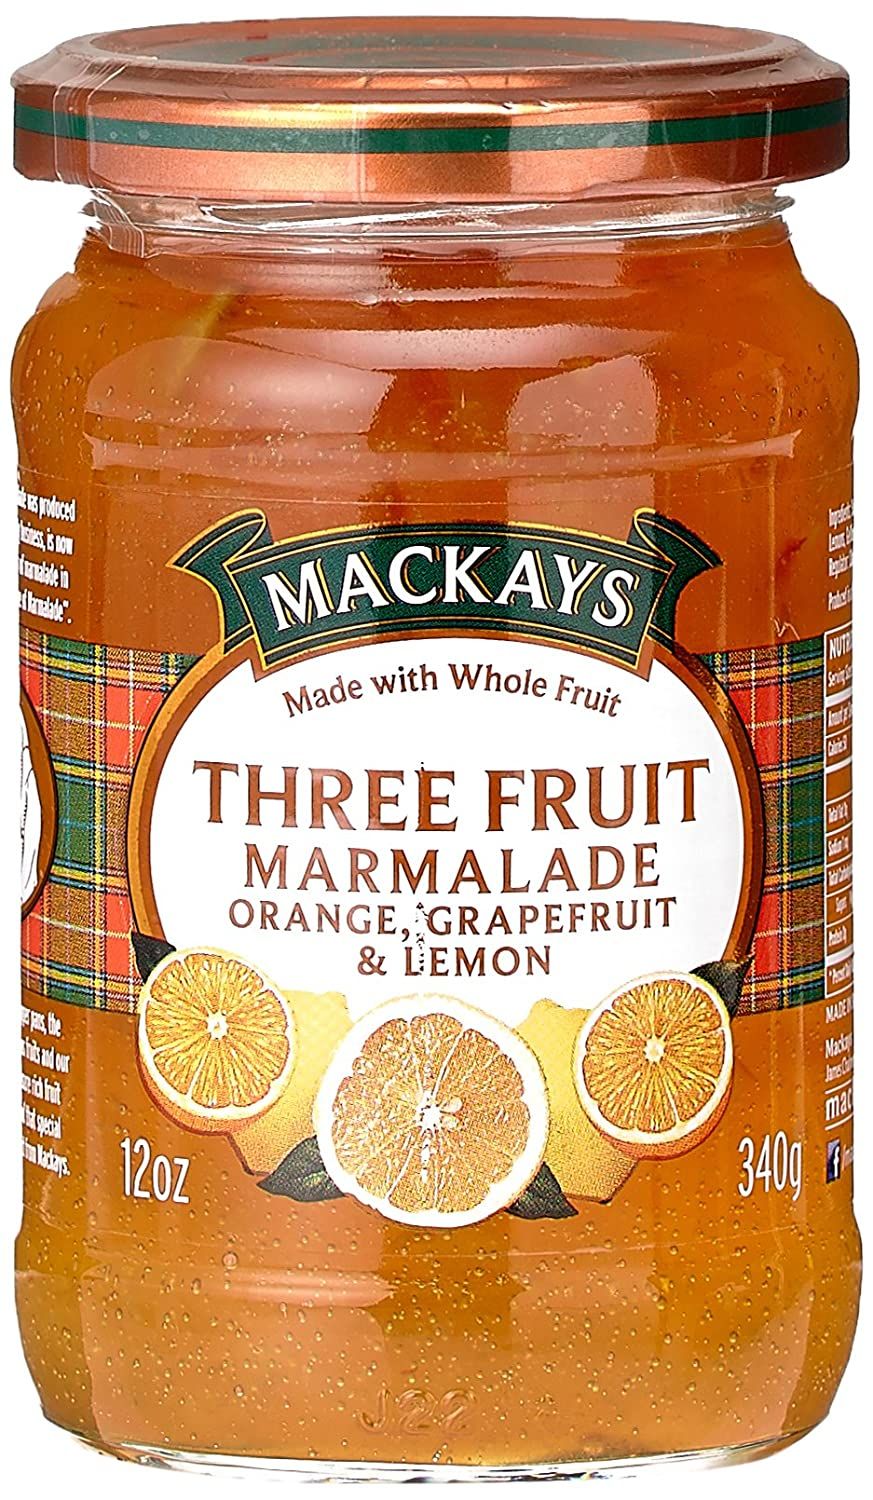 Mackays Three Fruit Marmalade Image